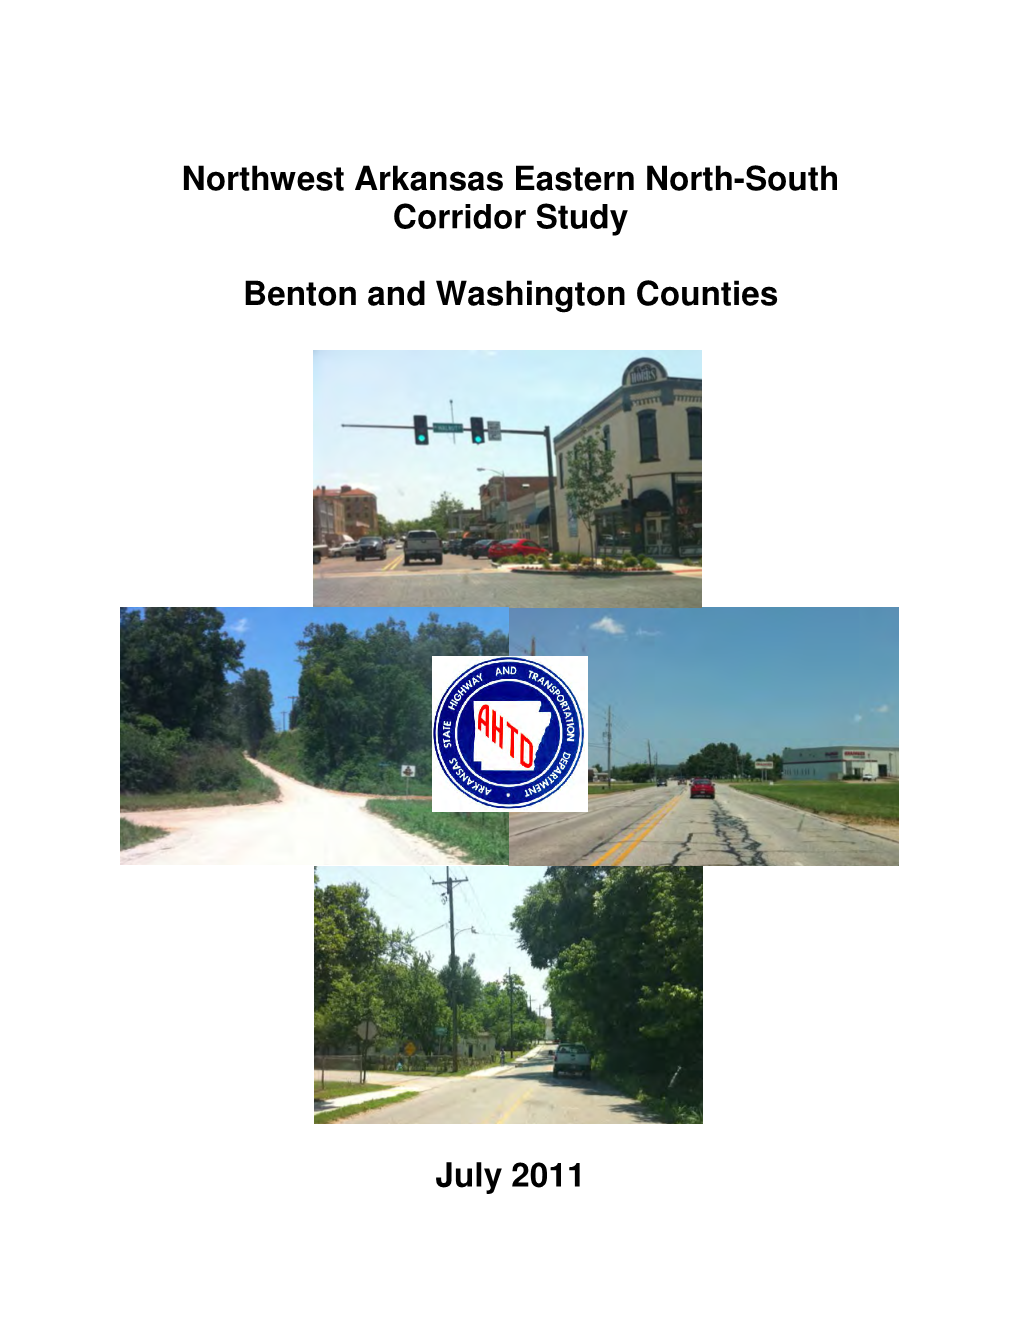 Northwest Arkansas Eastern North-South Corridor Study Benton